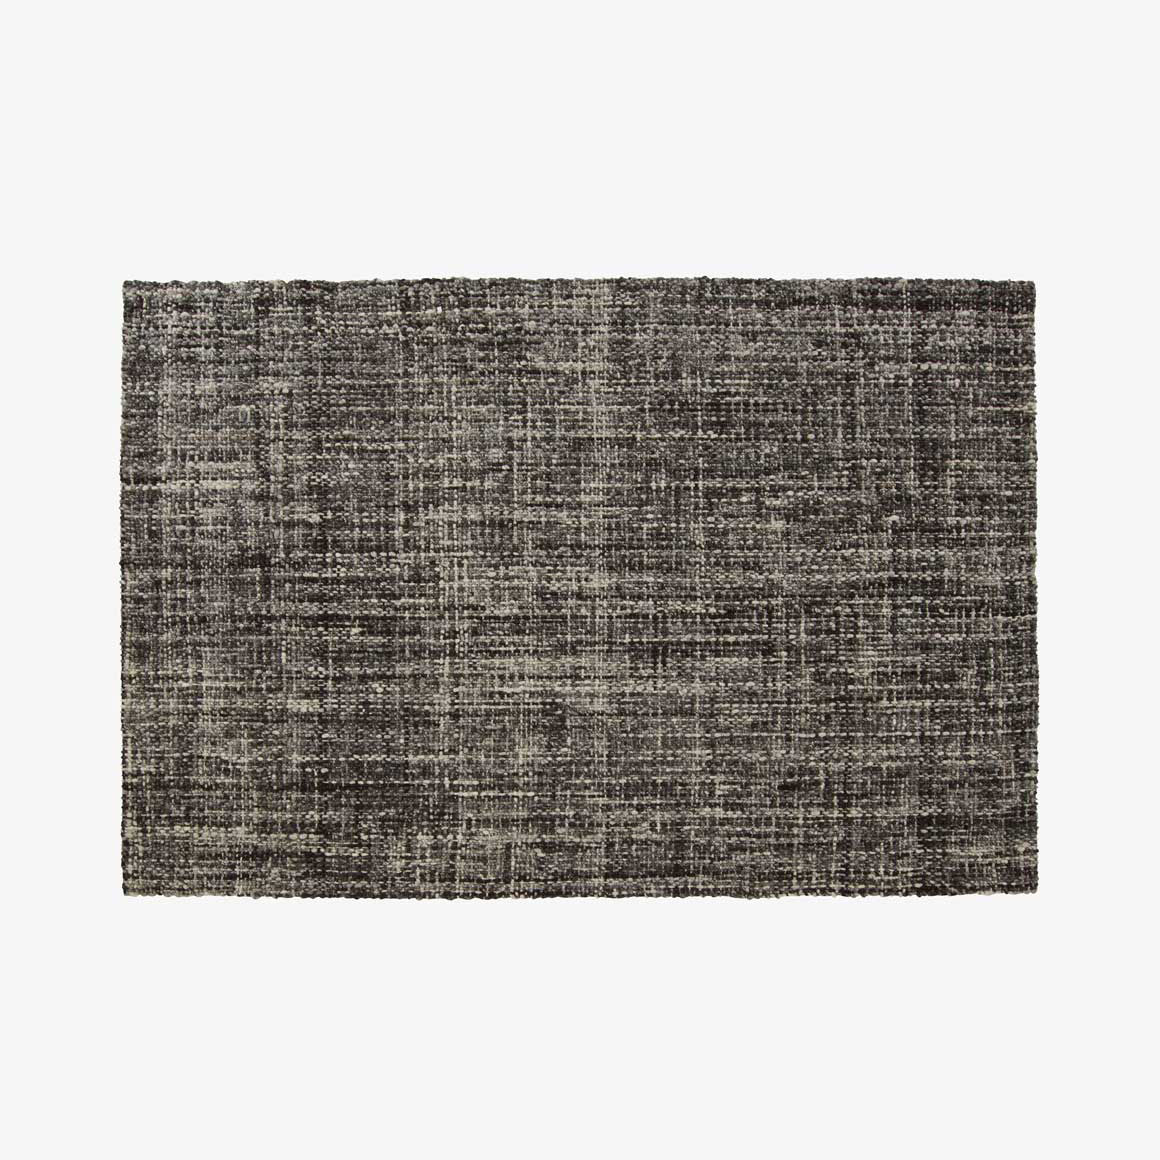 Image 地毯 灰色  1